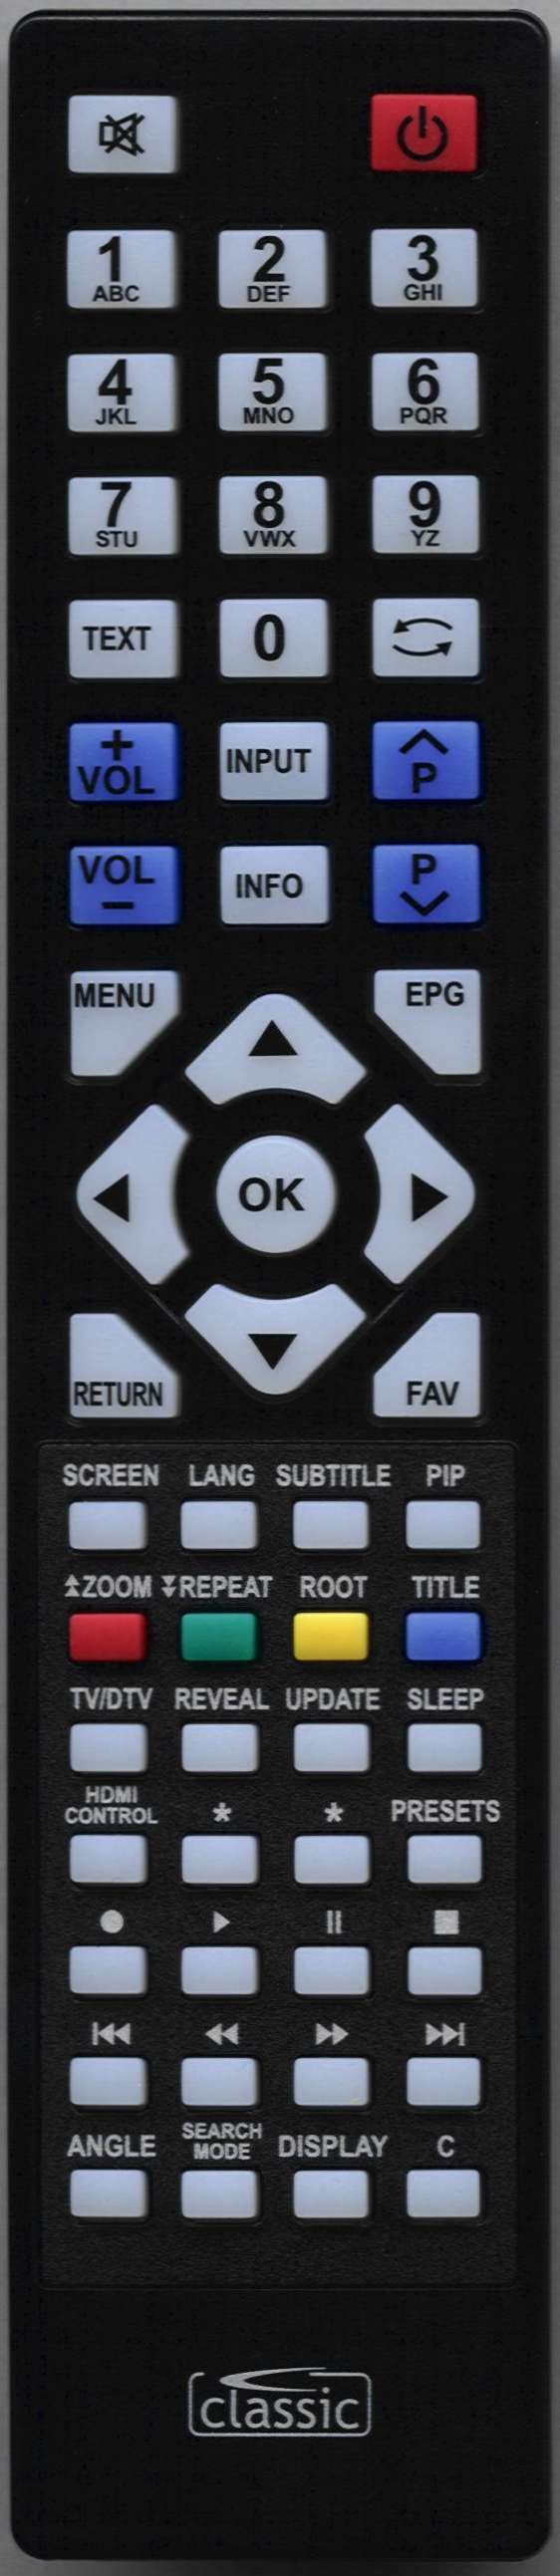 LUXOR 19751HDDIGITAL Remote Control Alternative